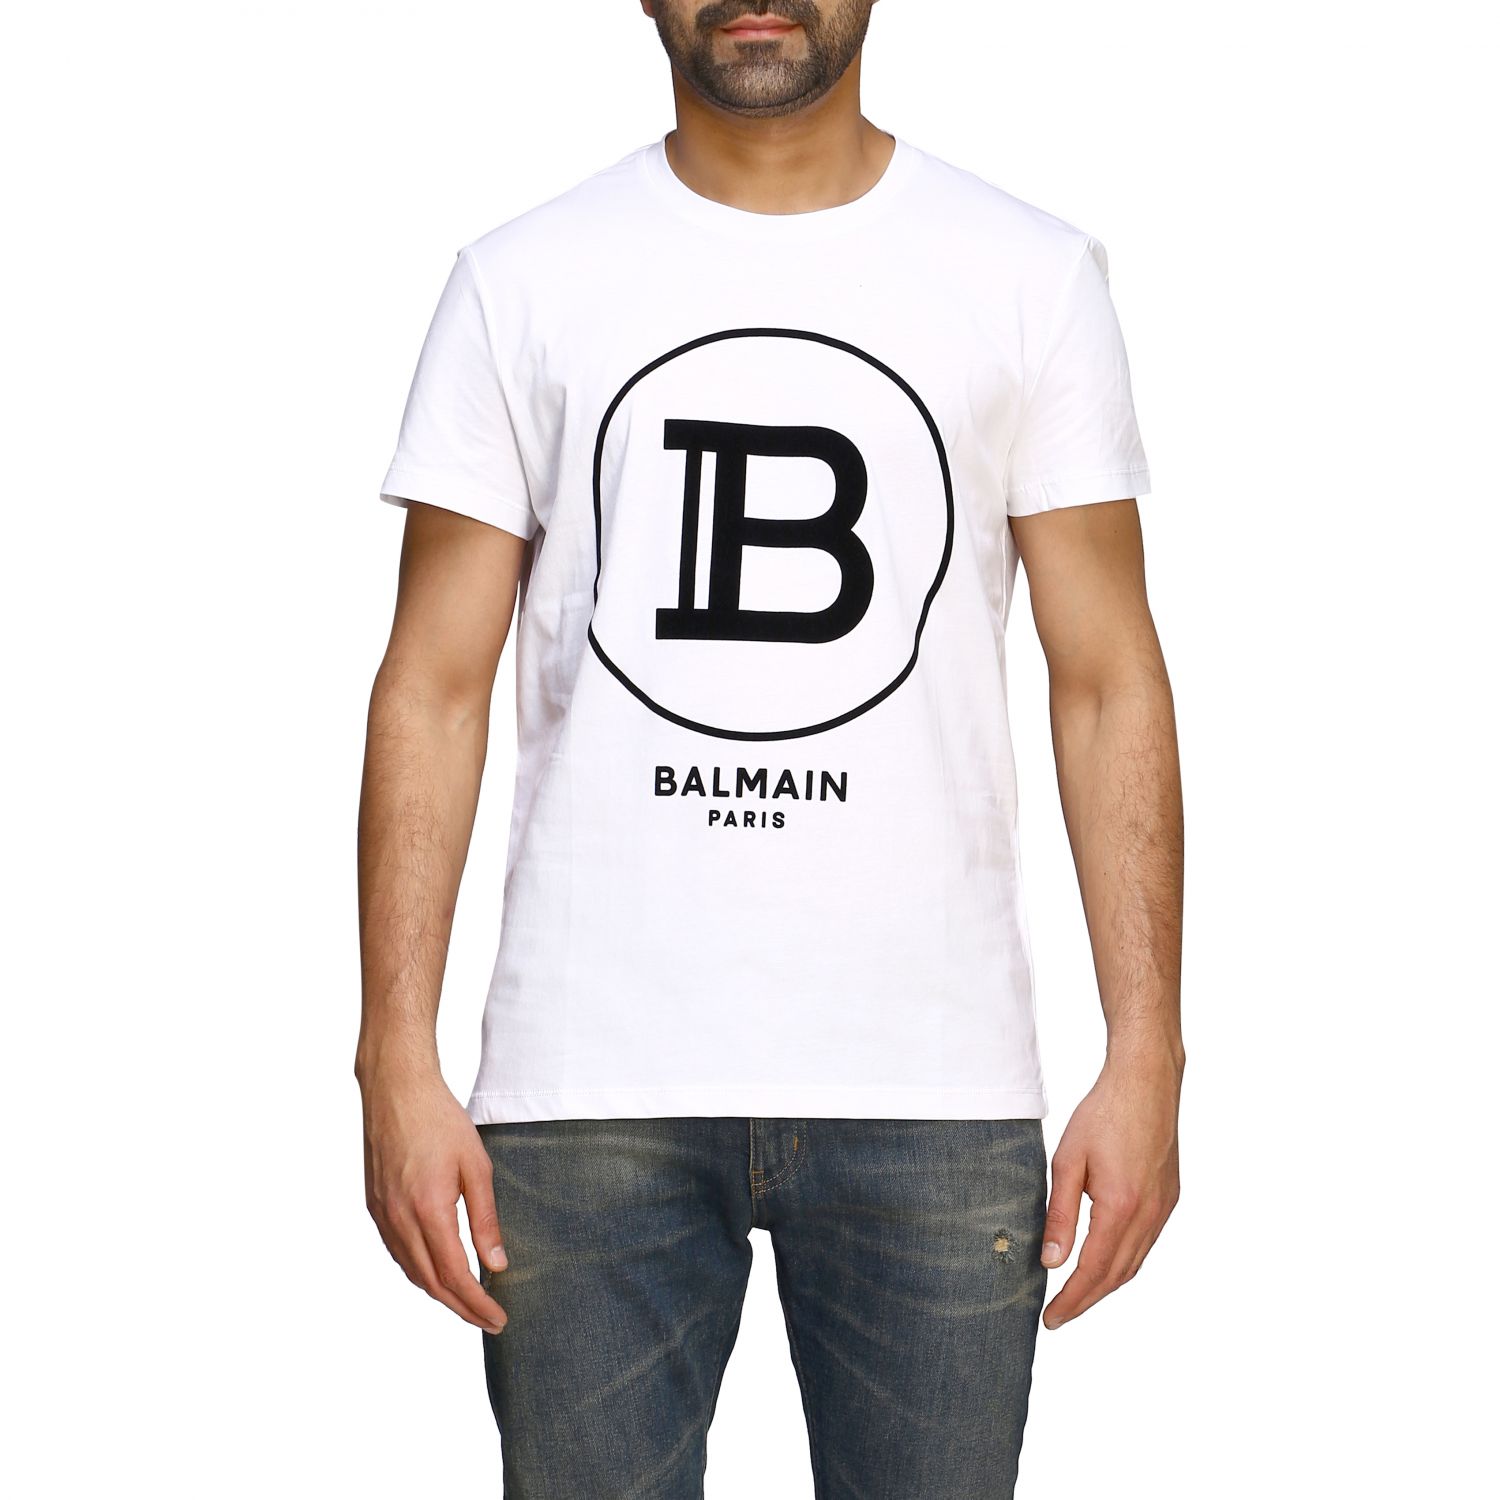 Balmain Outlet: T-shirt men | T-Shirt Balmain Men White | T-Shirt ...